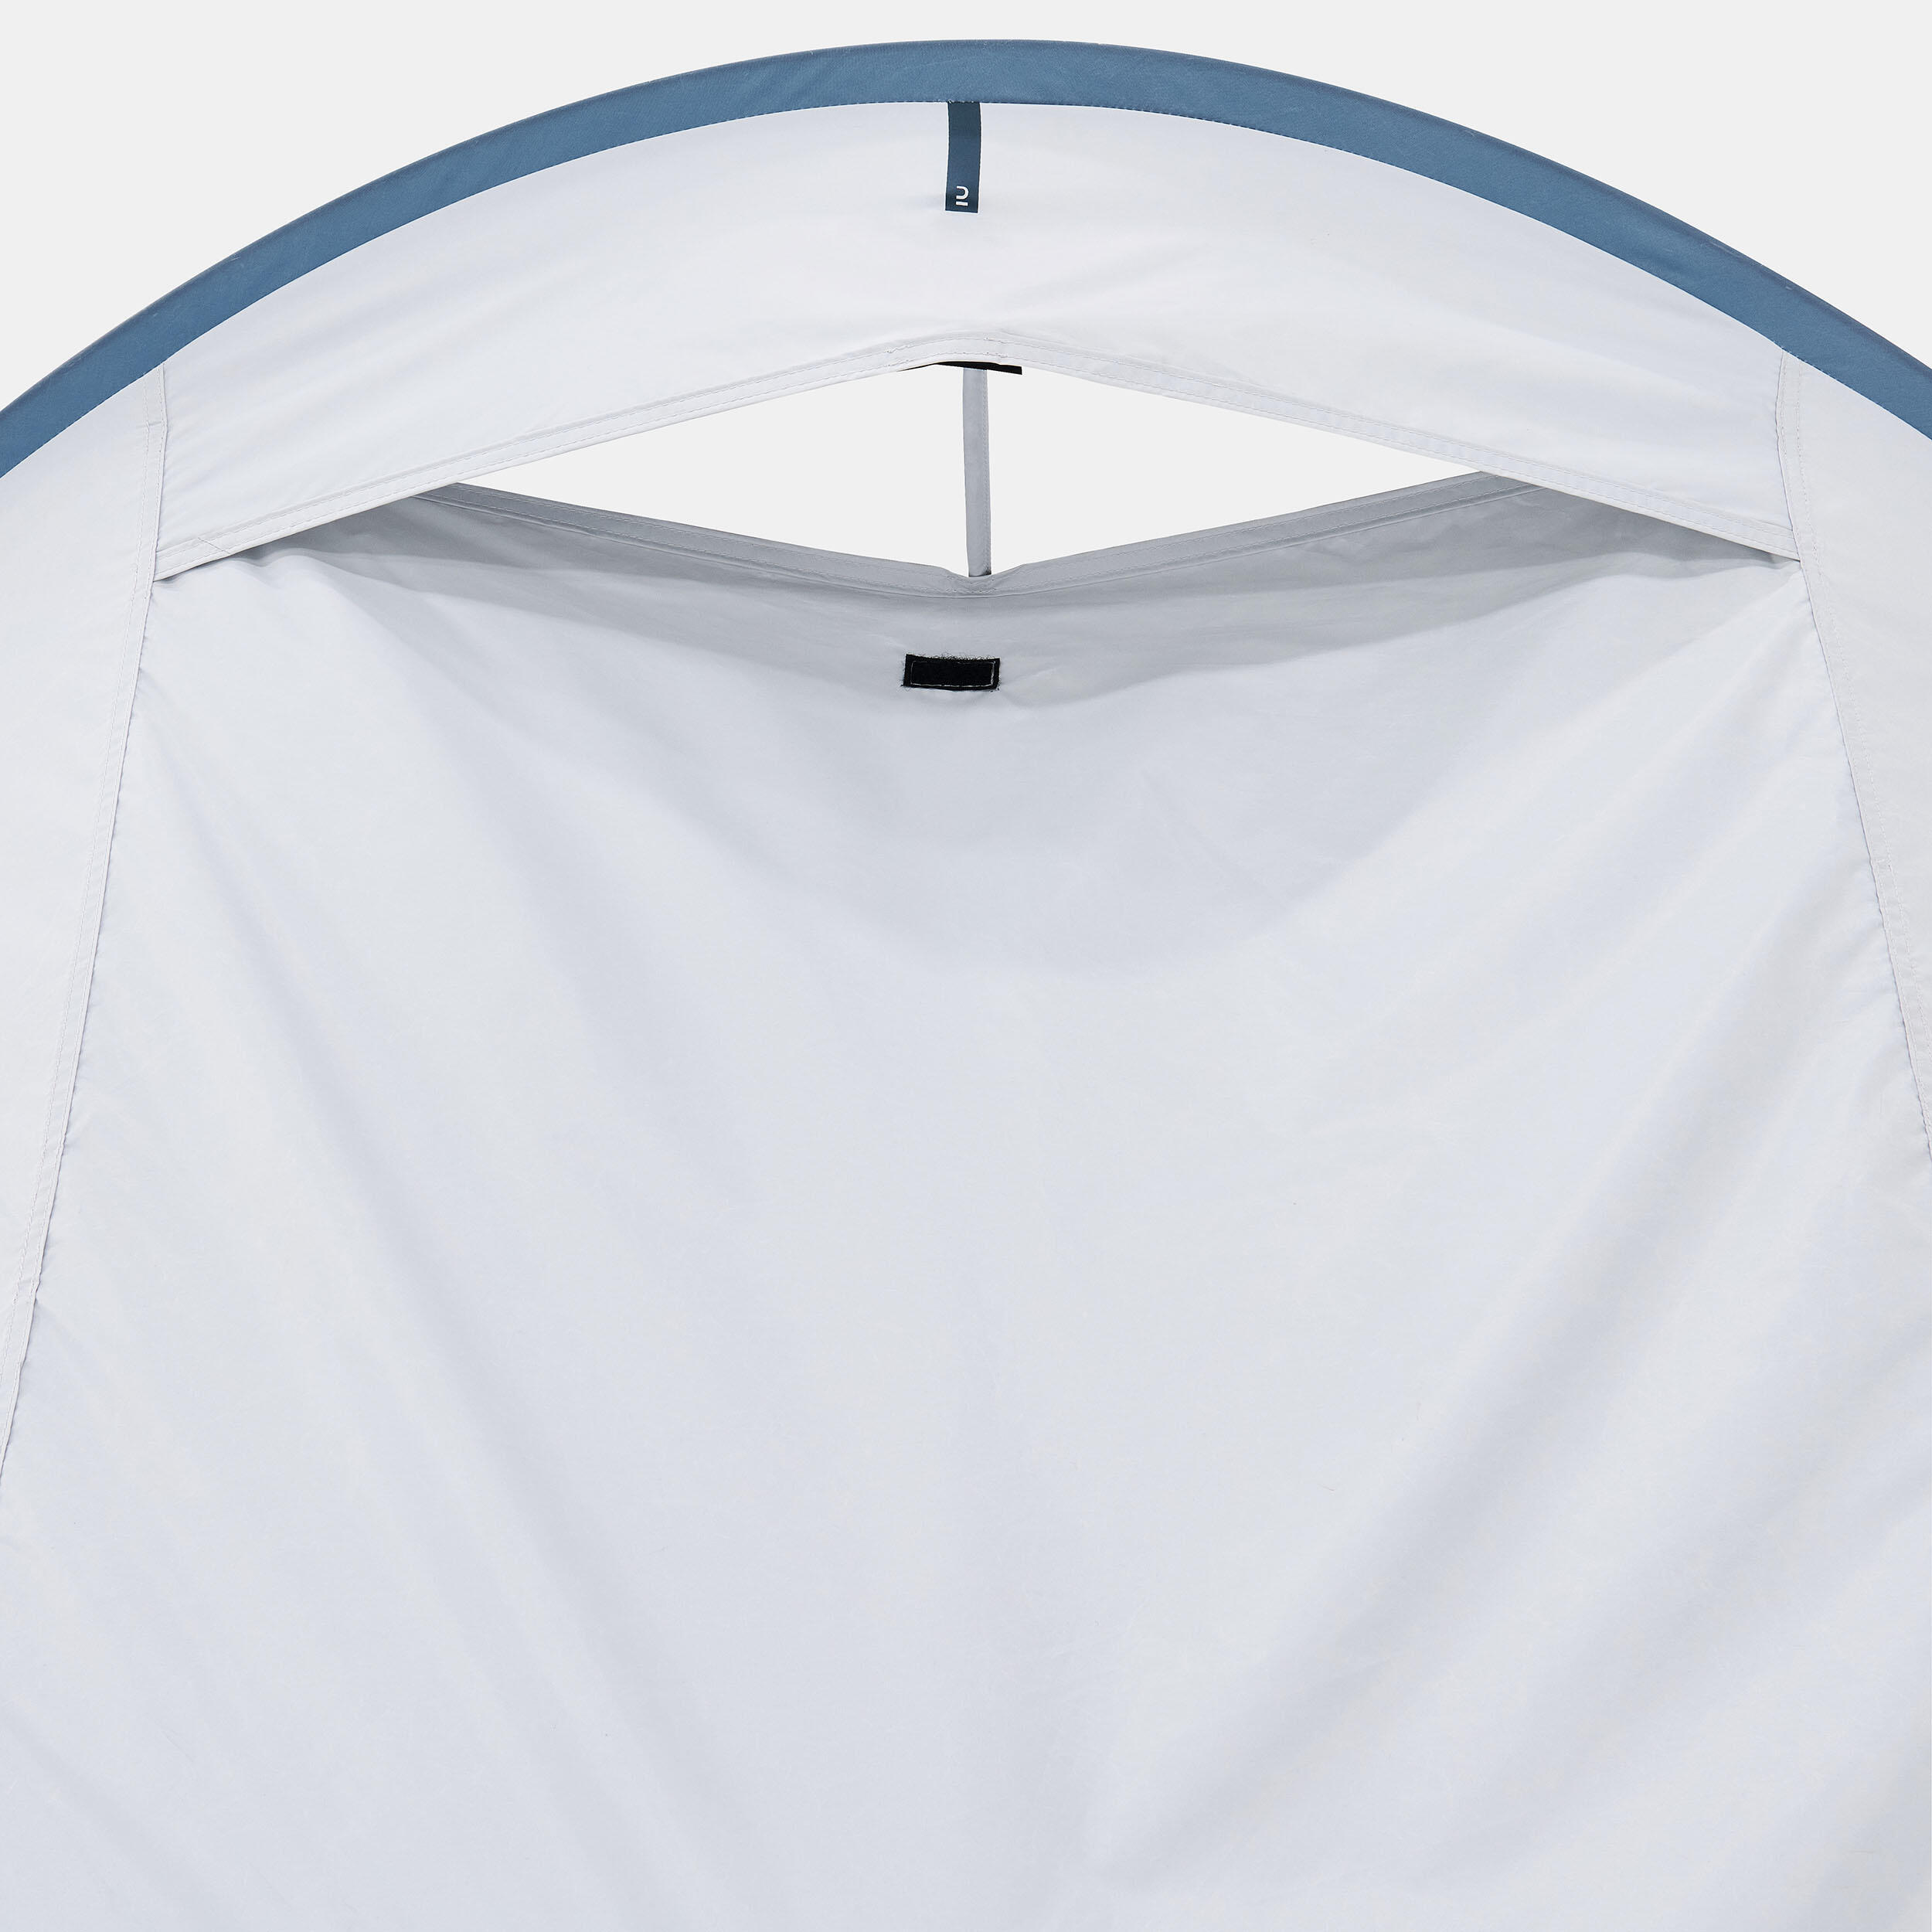 2-person pop-up tent - 2 seconds 2P Fresh 12/13